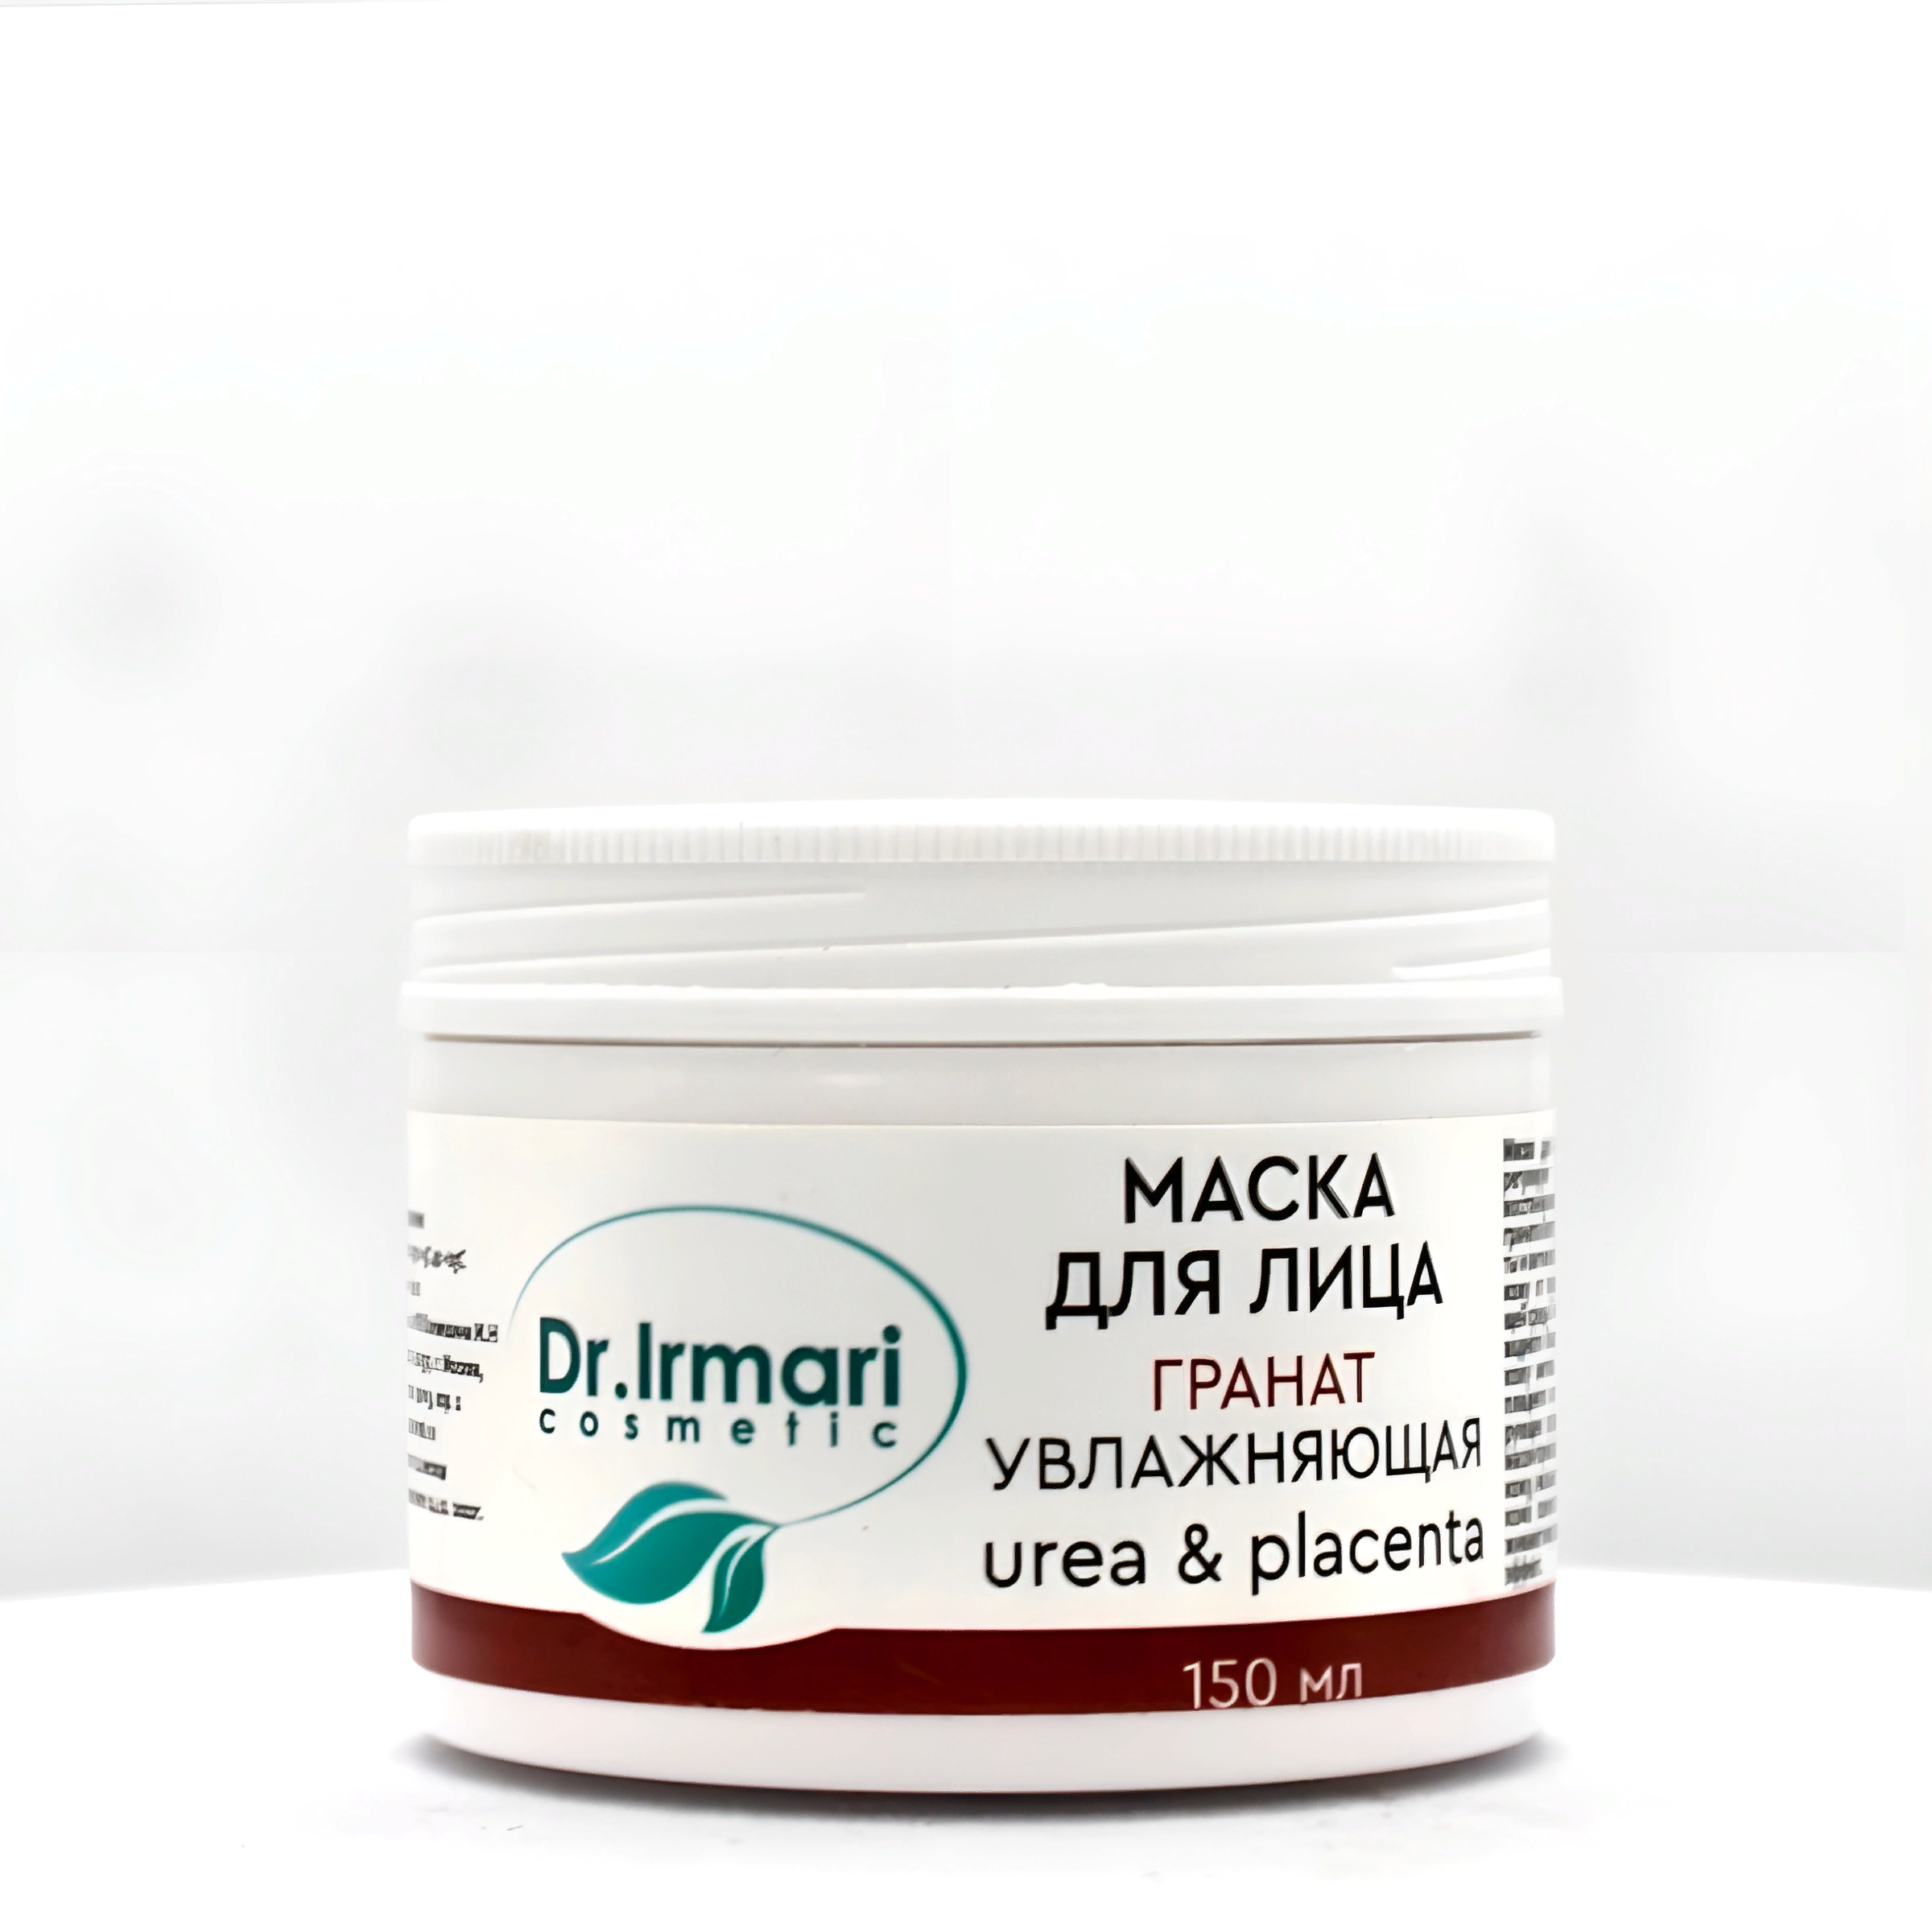 Маска для лица Dr.Irmari cosmetic Urea & Placenta Гранат увлажняющая 150 мл маска для лица dr irmari cosmetic urea